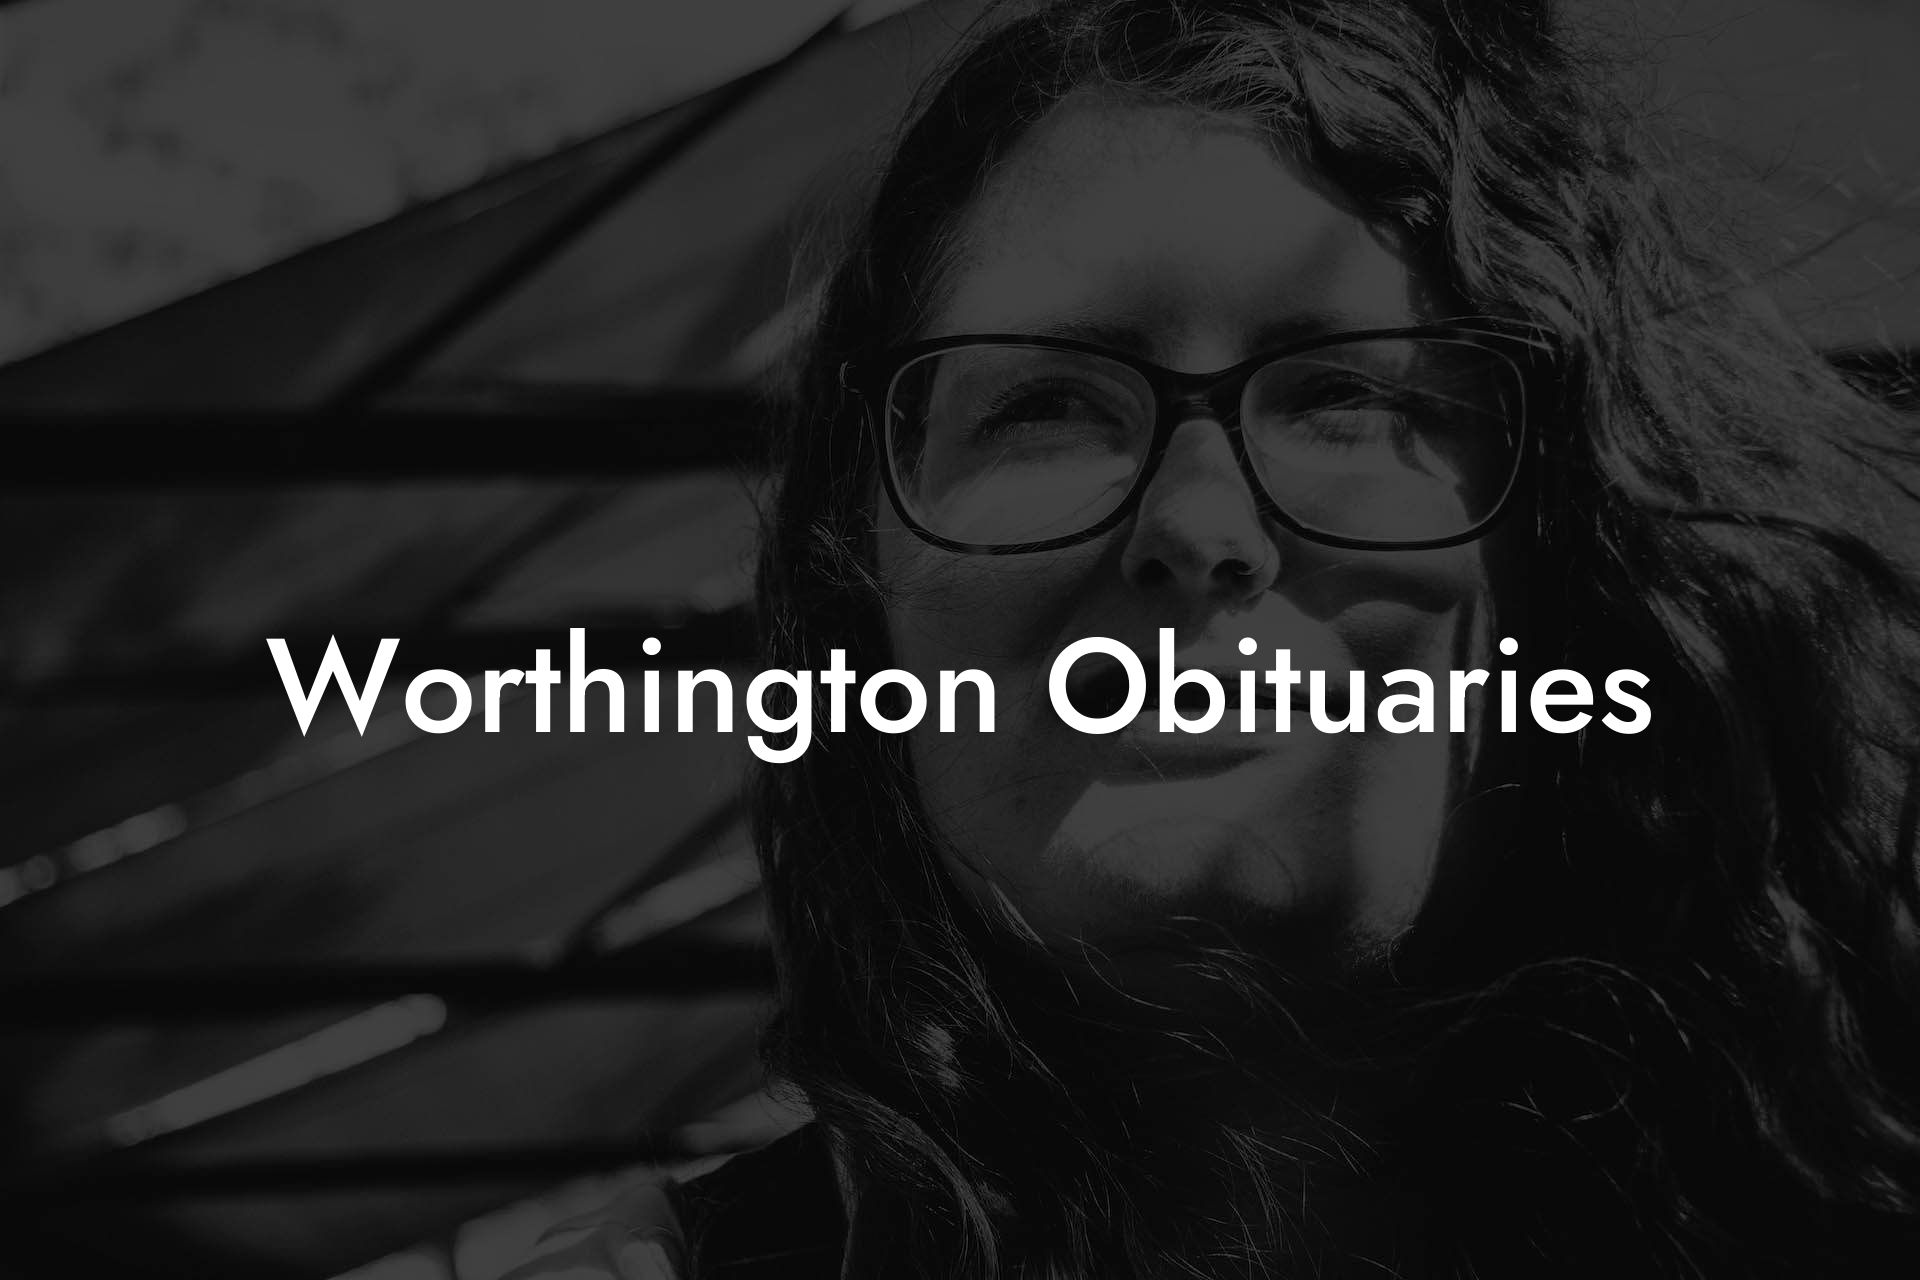 Worthington Obituaries